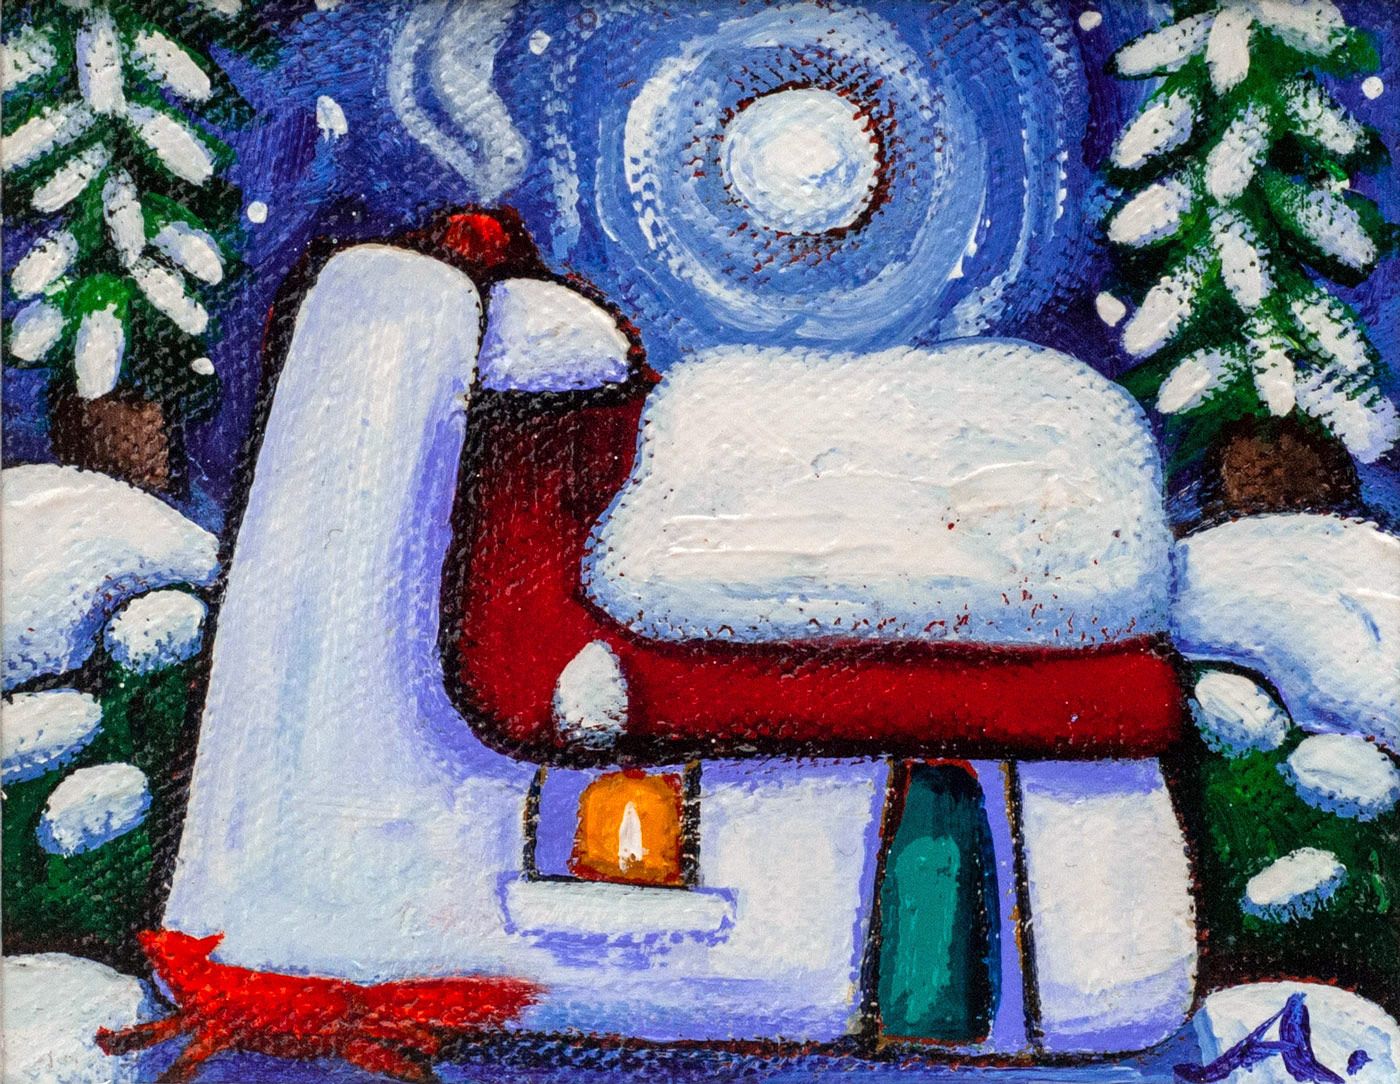 December Snowfall by Annie Robinson